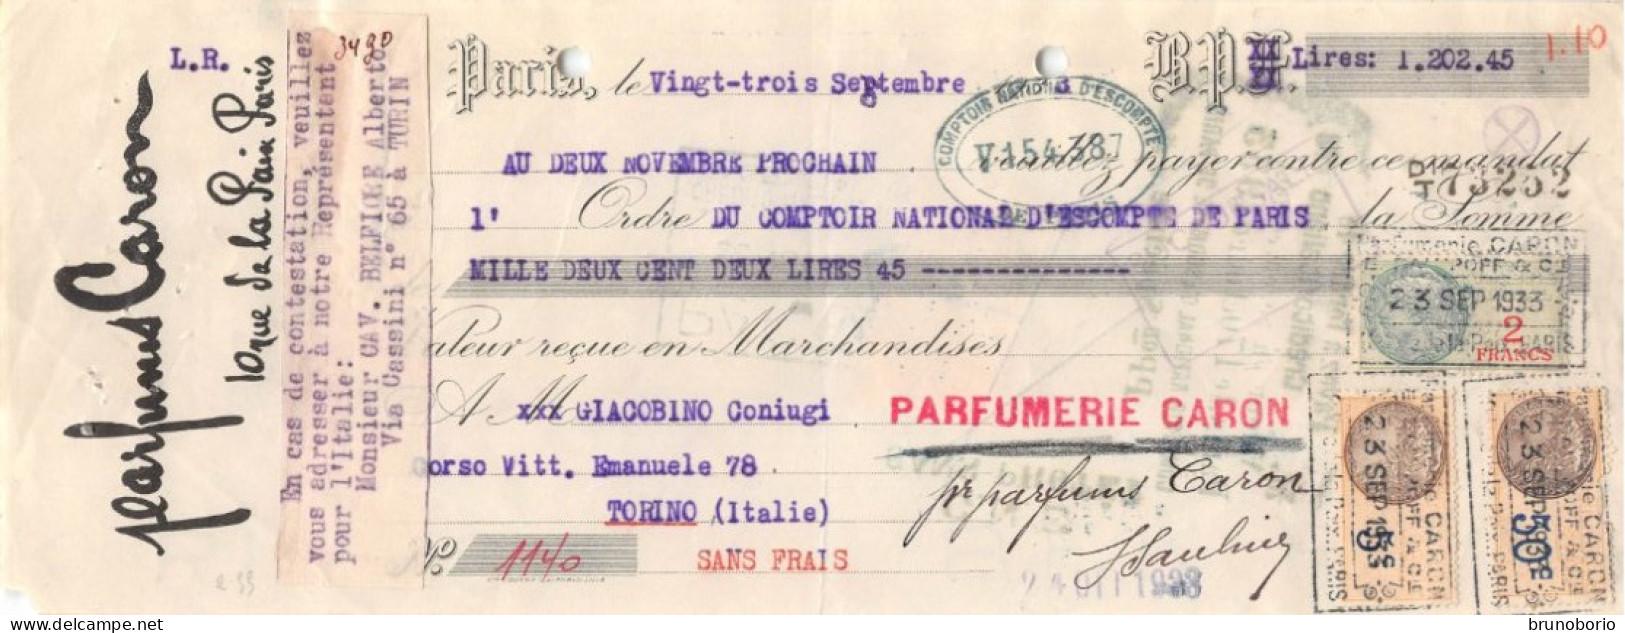 00160 "PARFUMERIE CARON - PARIS  - DITTA GIACOBINO -TORINO - CAMBIALE N.1140 - NT.- CREDITO ITAL 3 BOLLI"  CAMBIALE ORIG - Bills Of Exchange